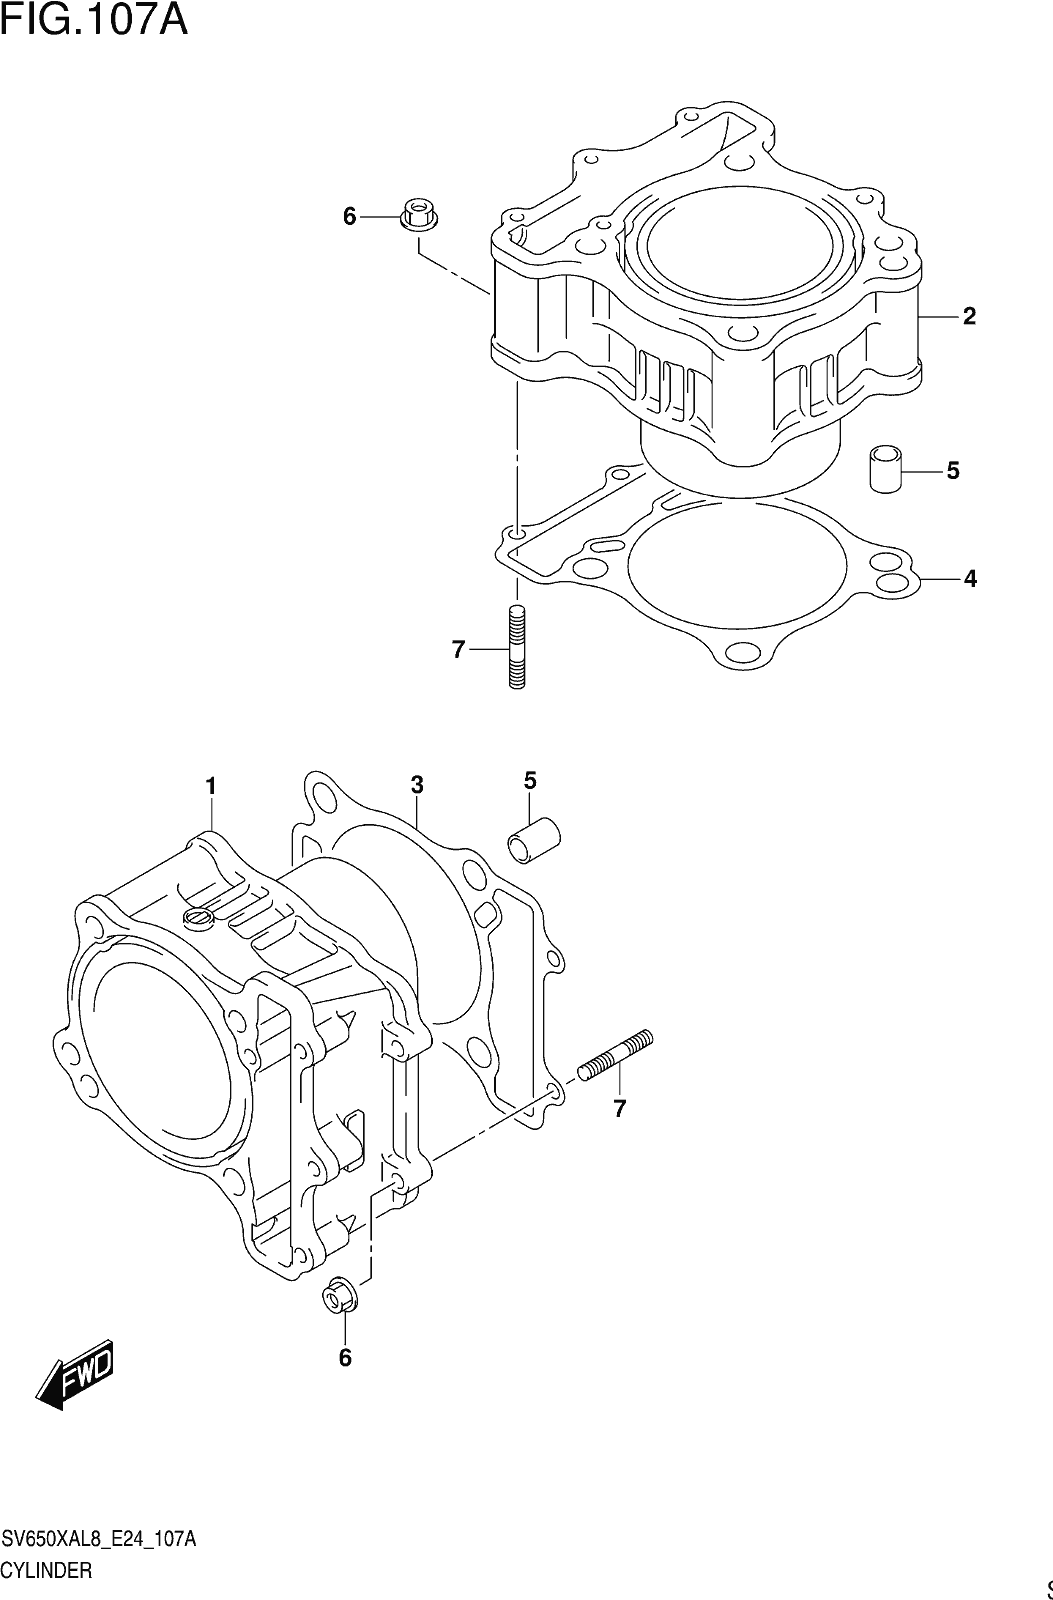 Fig.107a Cylinder